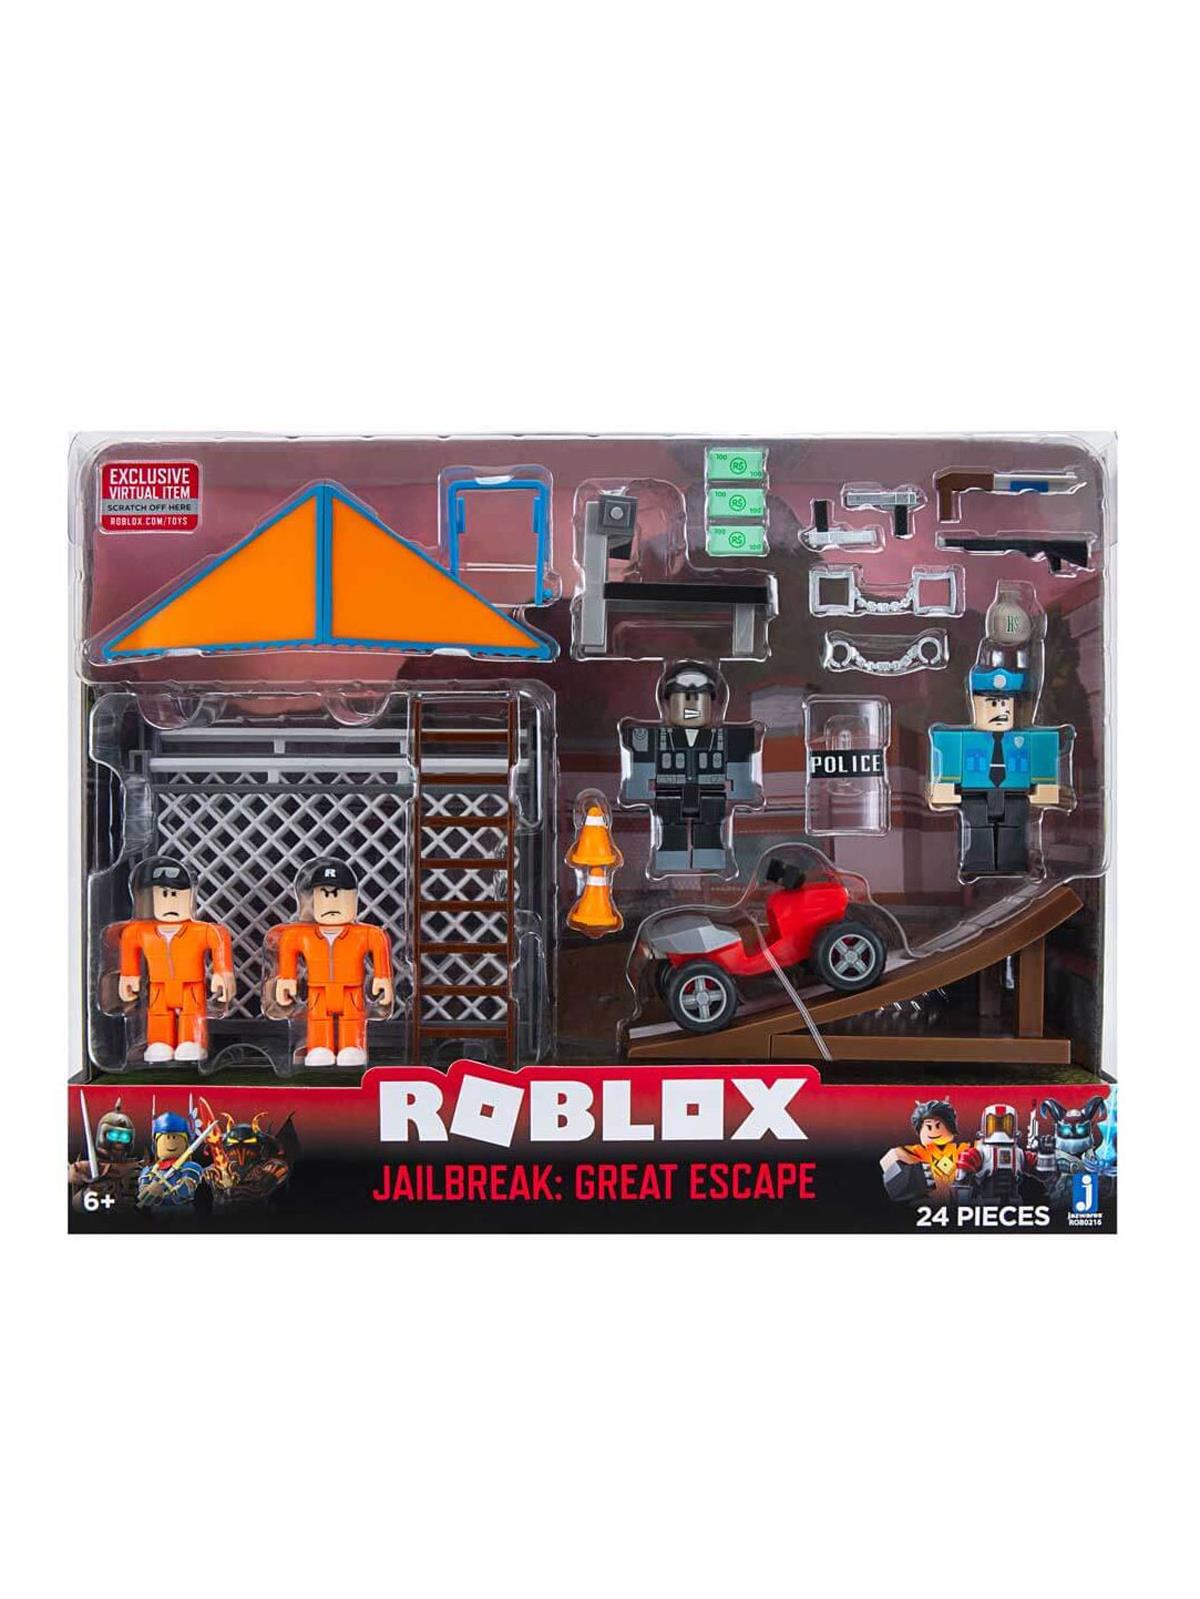 Giochi Preziosi Roblox Oyun Paketi Sari Fiyati Gio Rbl31000 - roblox boyama oyunu